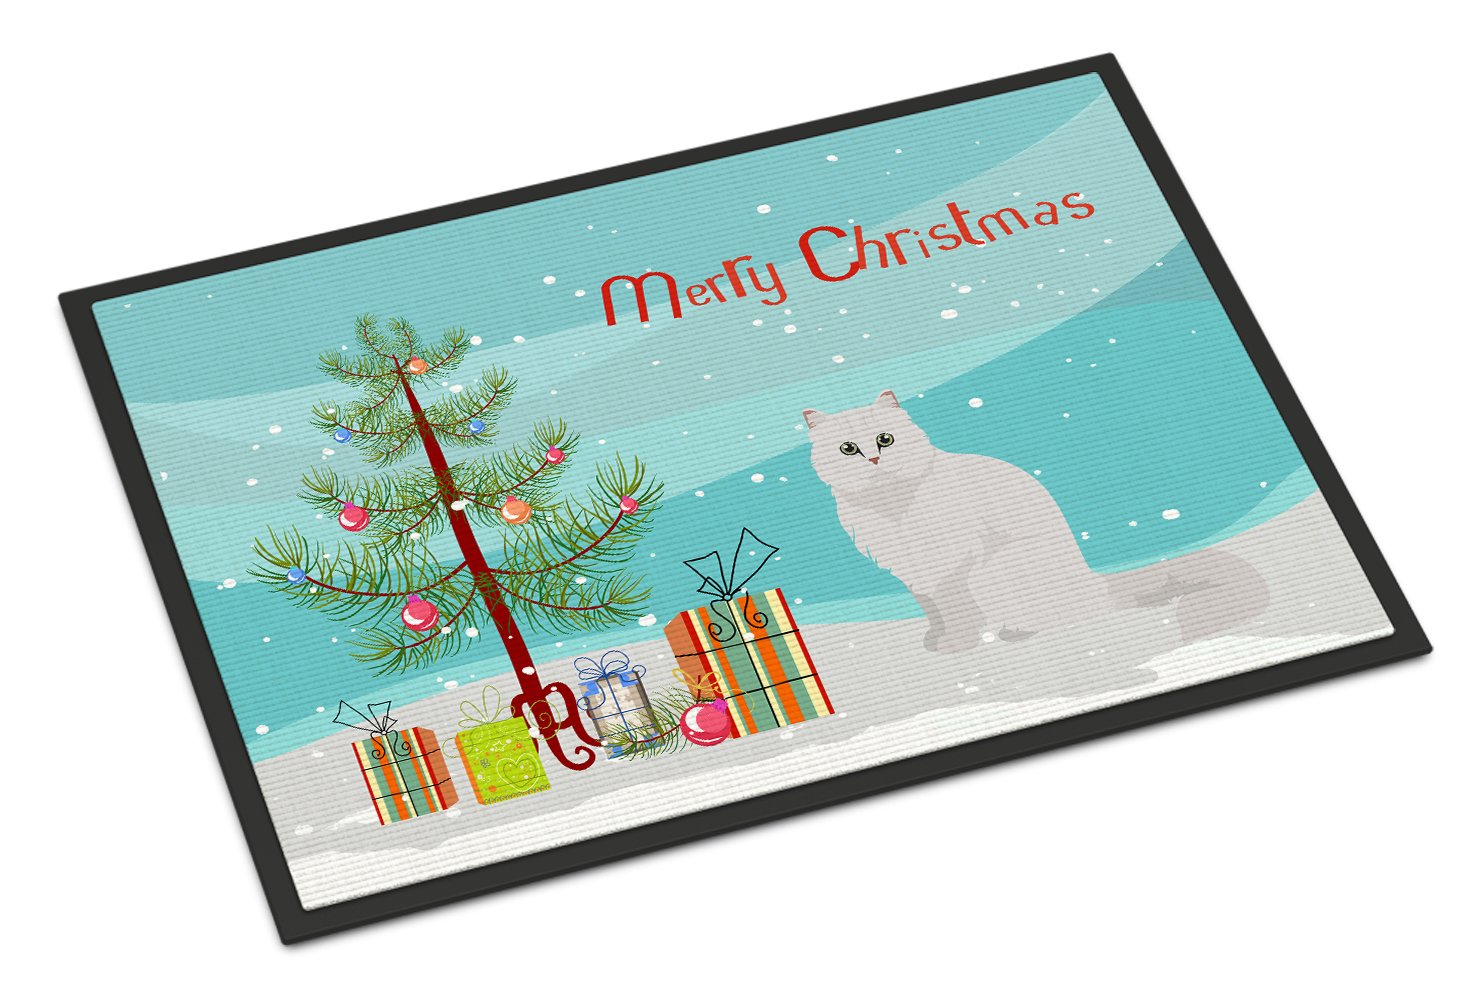 Chinchilla Persian Longhair Cat Merry Christmas Indoor or Outdoor Mat 24x36 CK4758JMAT by Caroline's Treasures